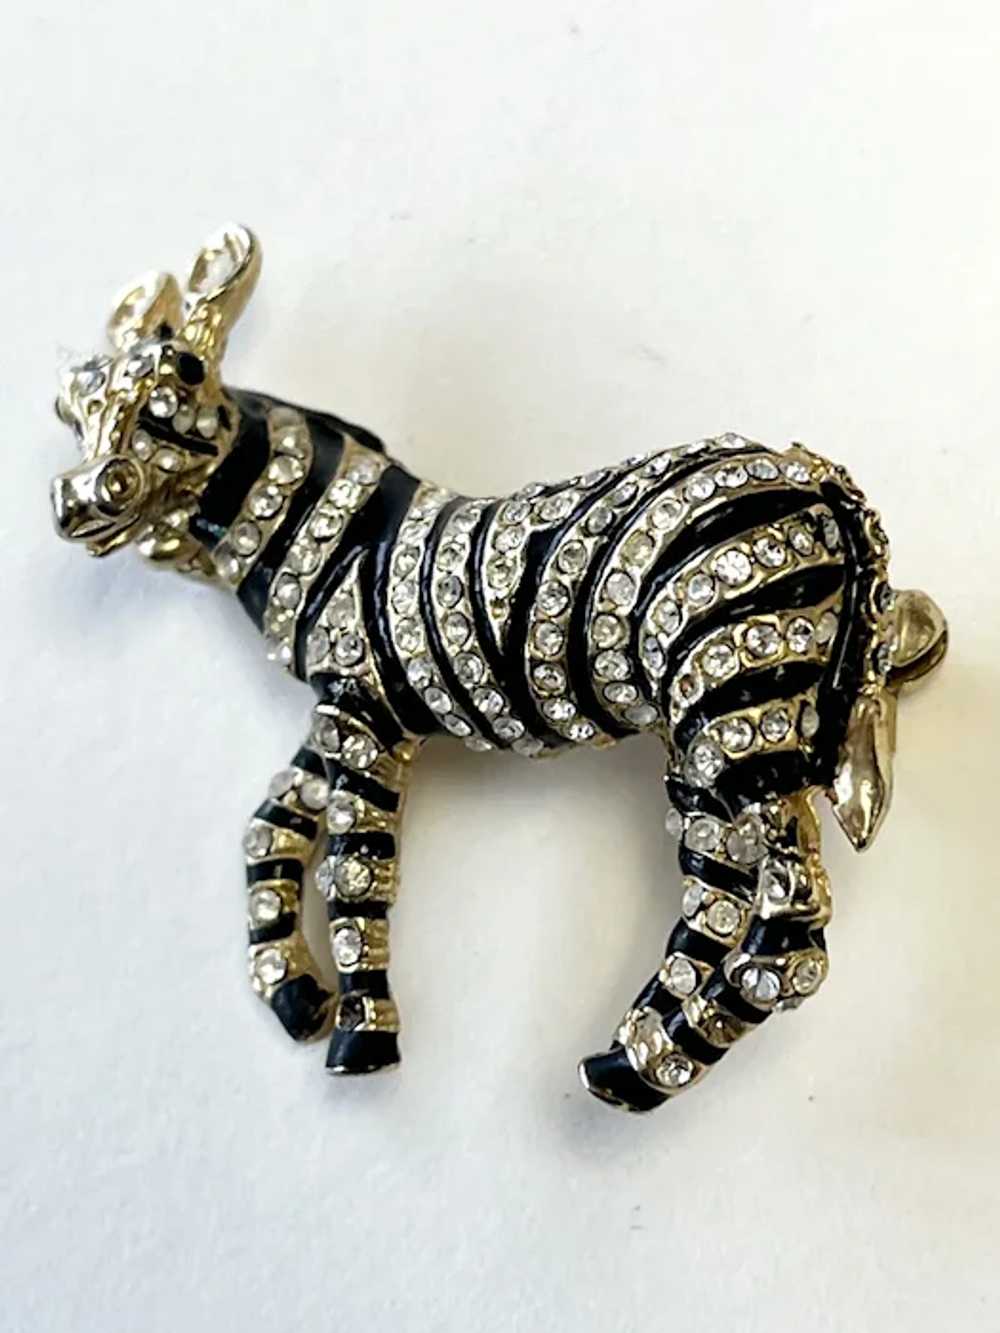 Vintage Rhinestone Enamel Zebra Brooch Pin - image 4